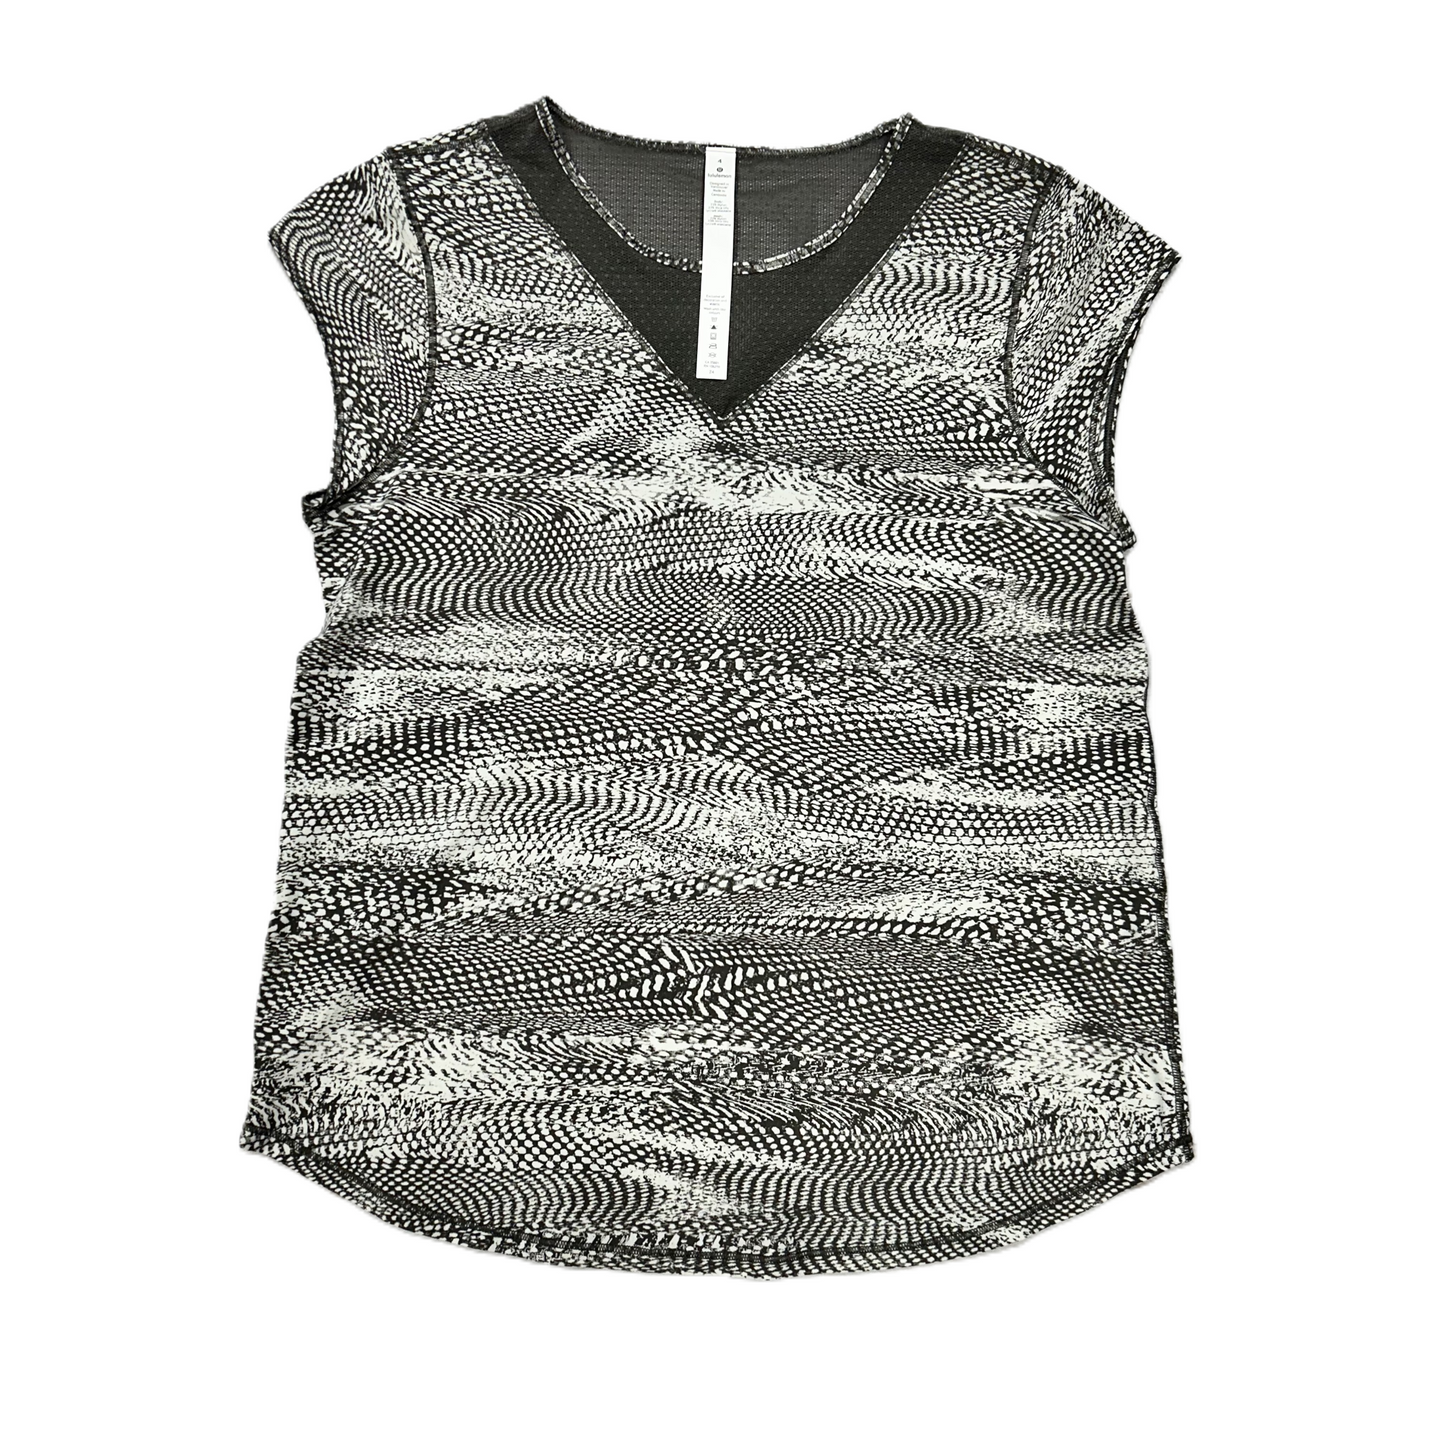 Grey & White Athletic Top Short Sleeve By Lululemon, Size: 4